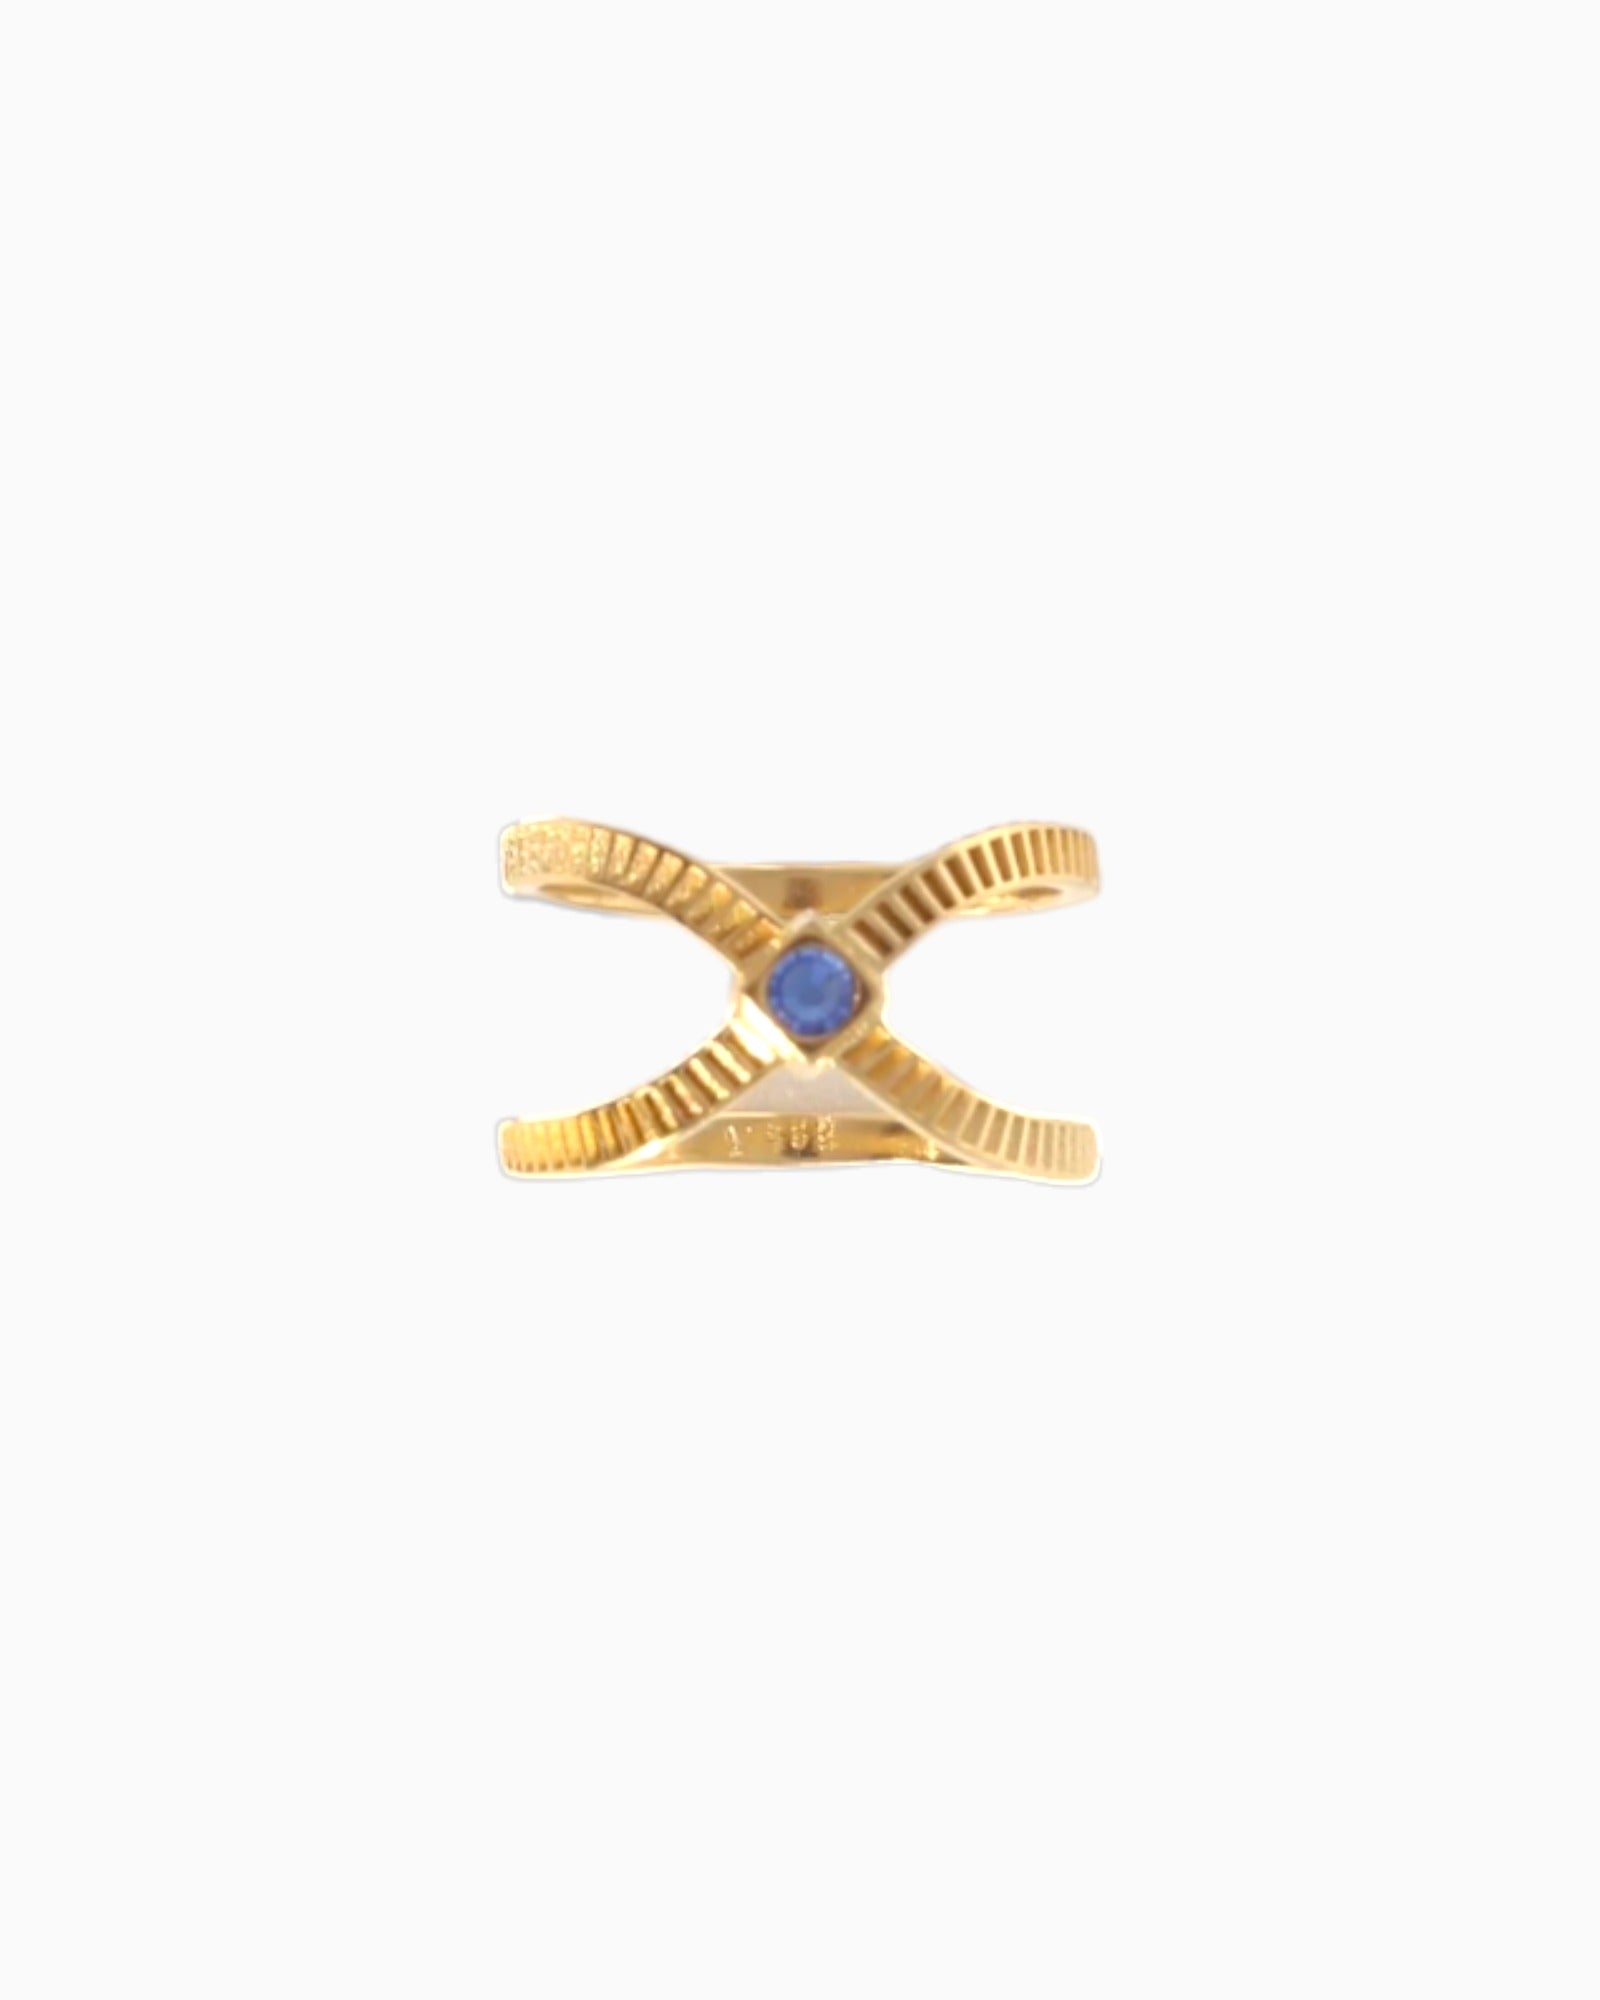 Swiss made Handmade Calliophis golden ring with blue Swarovski crystal